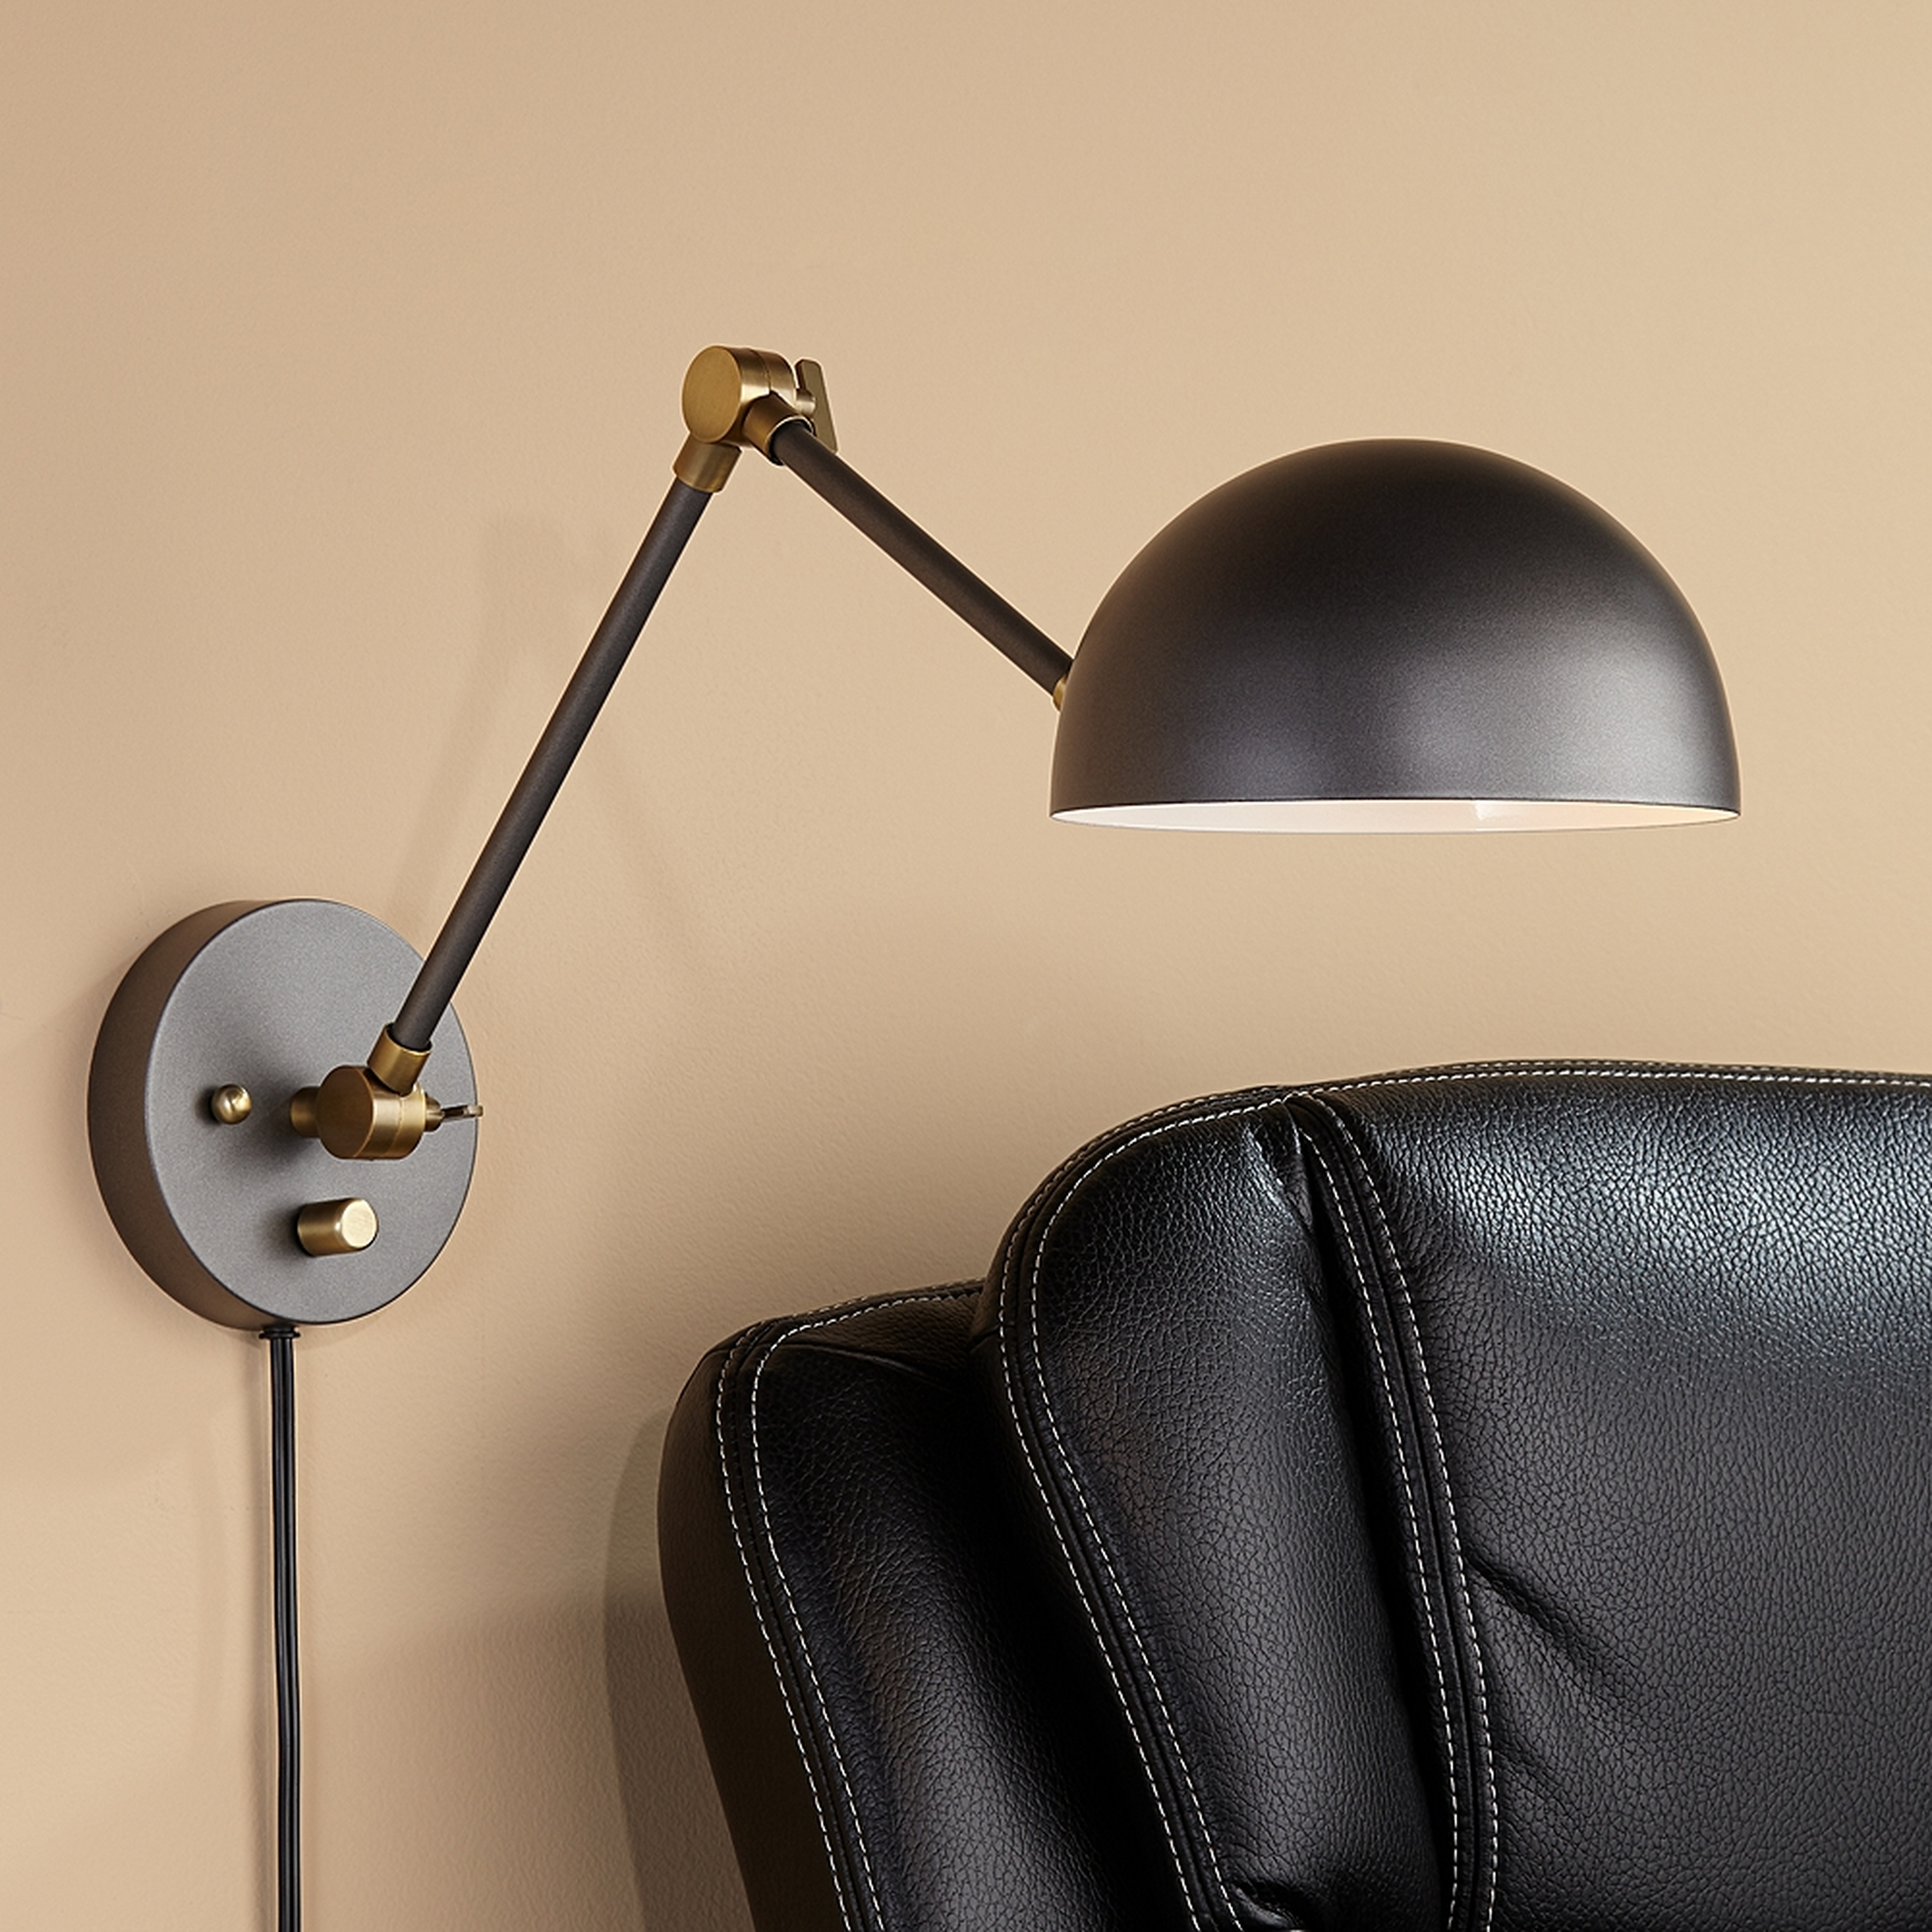 Kenora Gunmetal and Brass Plug-In Swing Arm Wall Lamp - Style # 76D36 - Lamps Plus